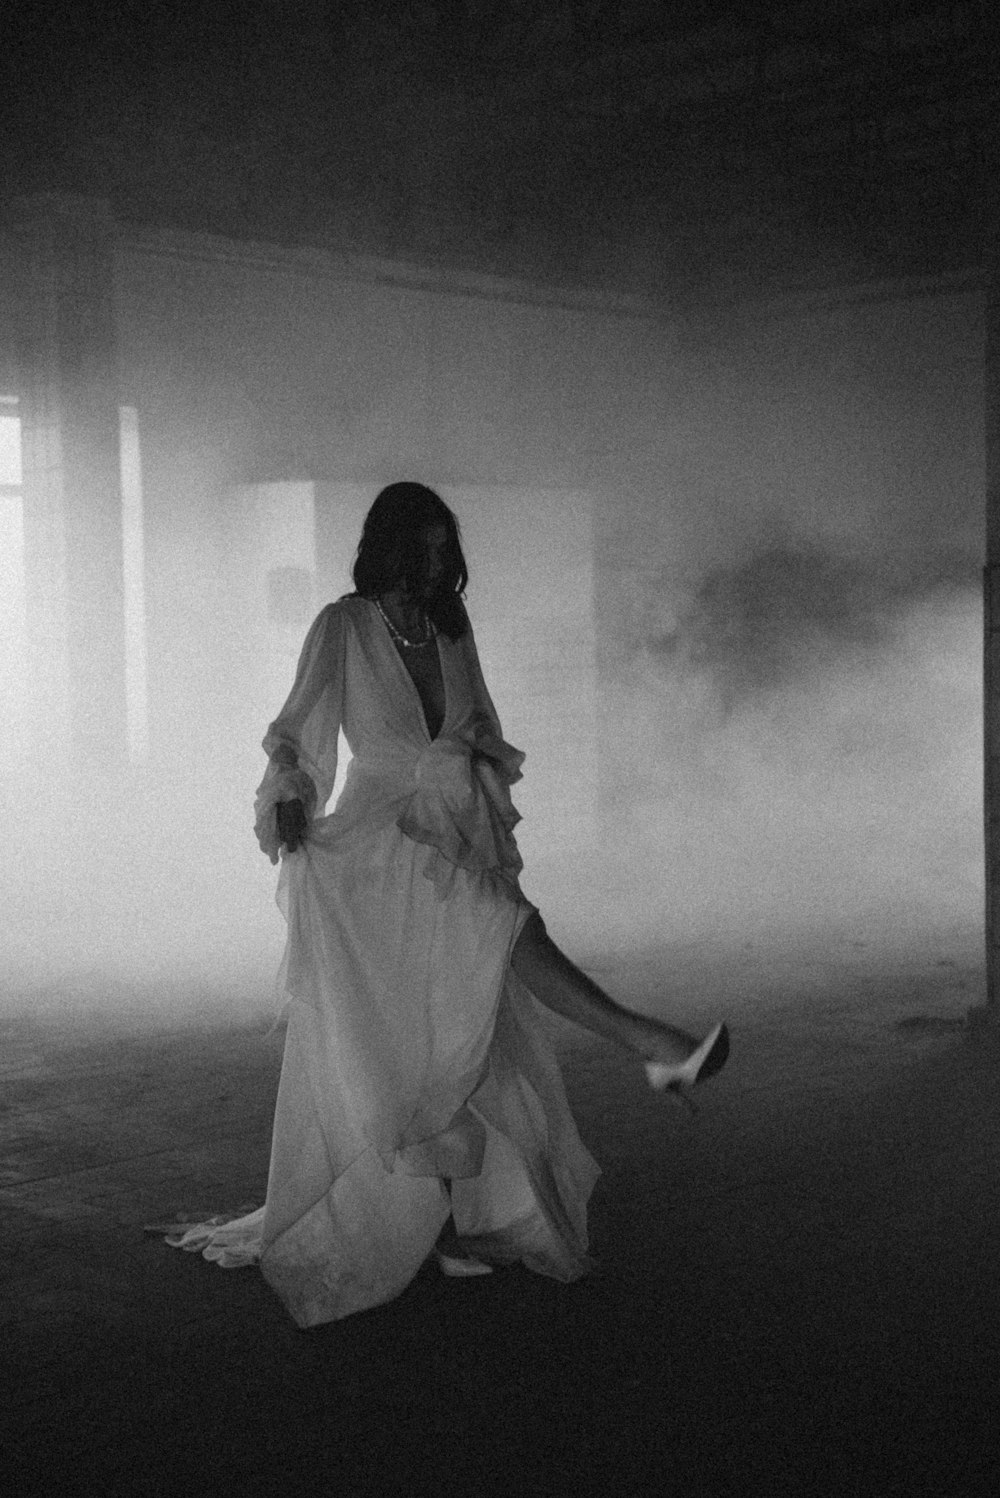 a woman in a long white dress walking through a foggy room